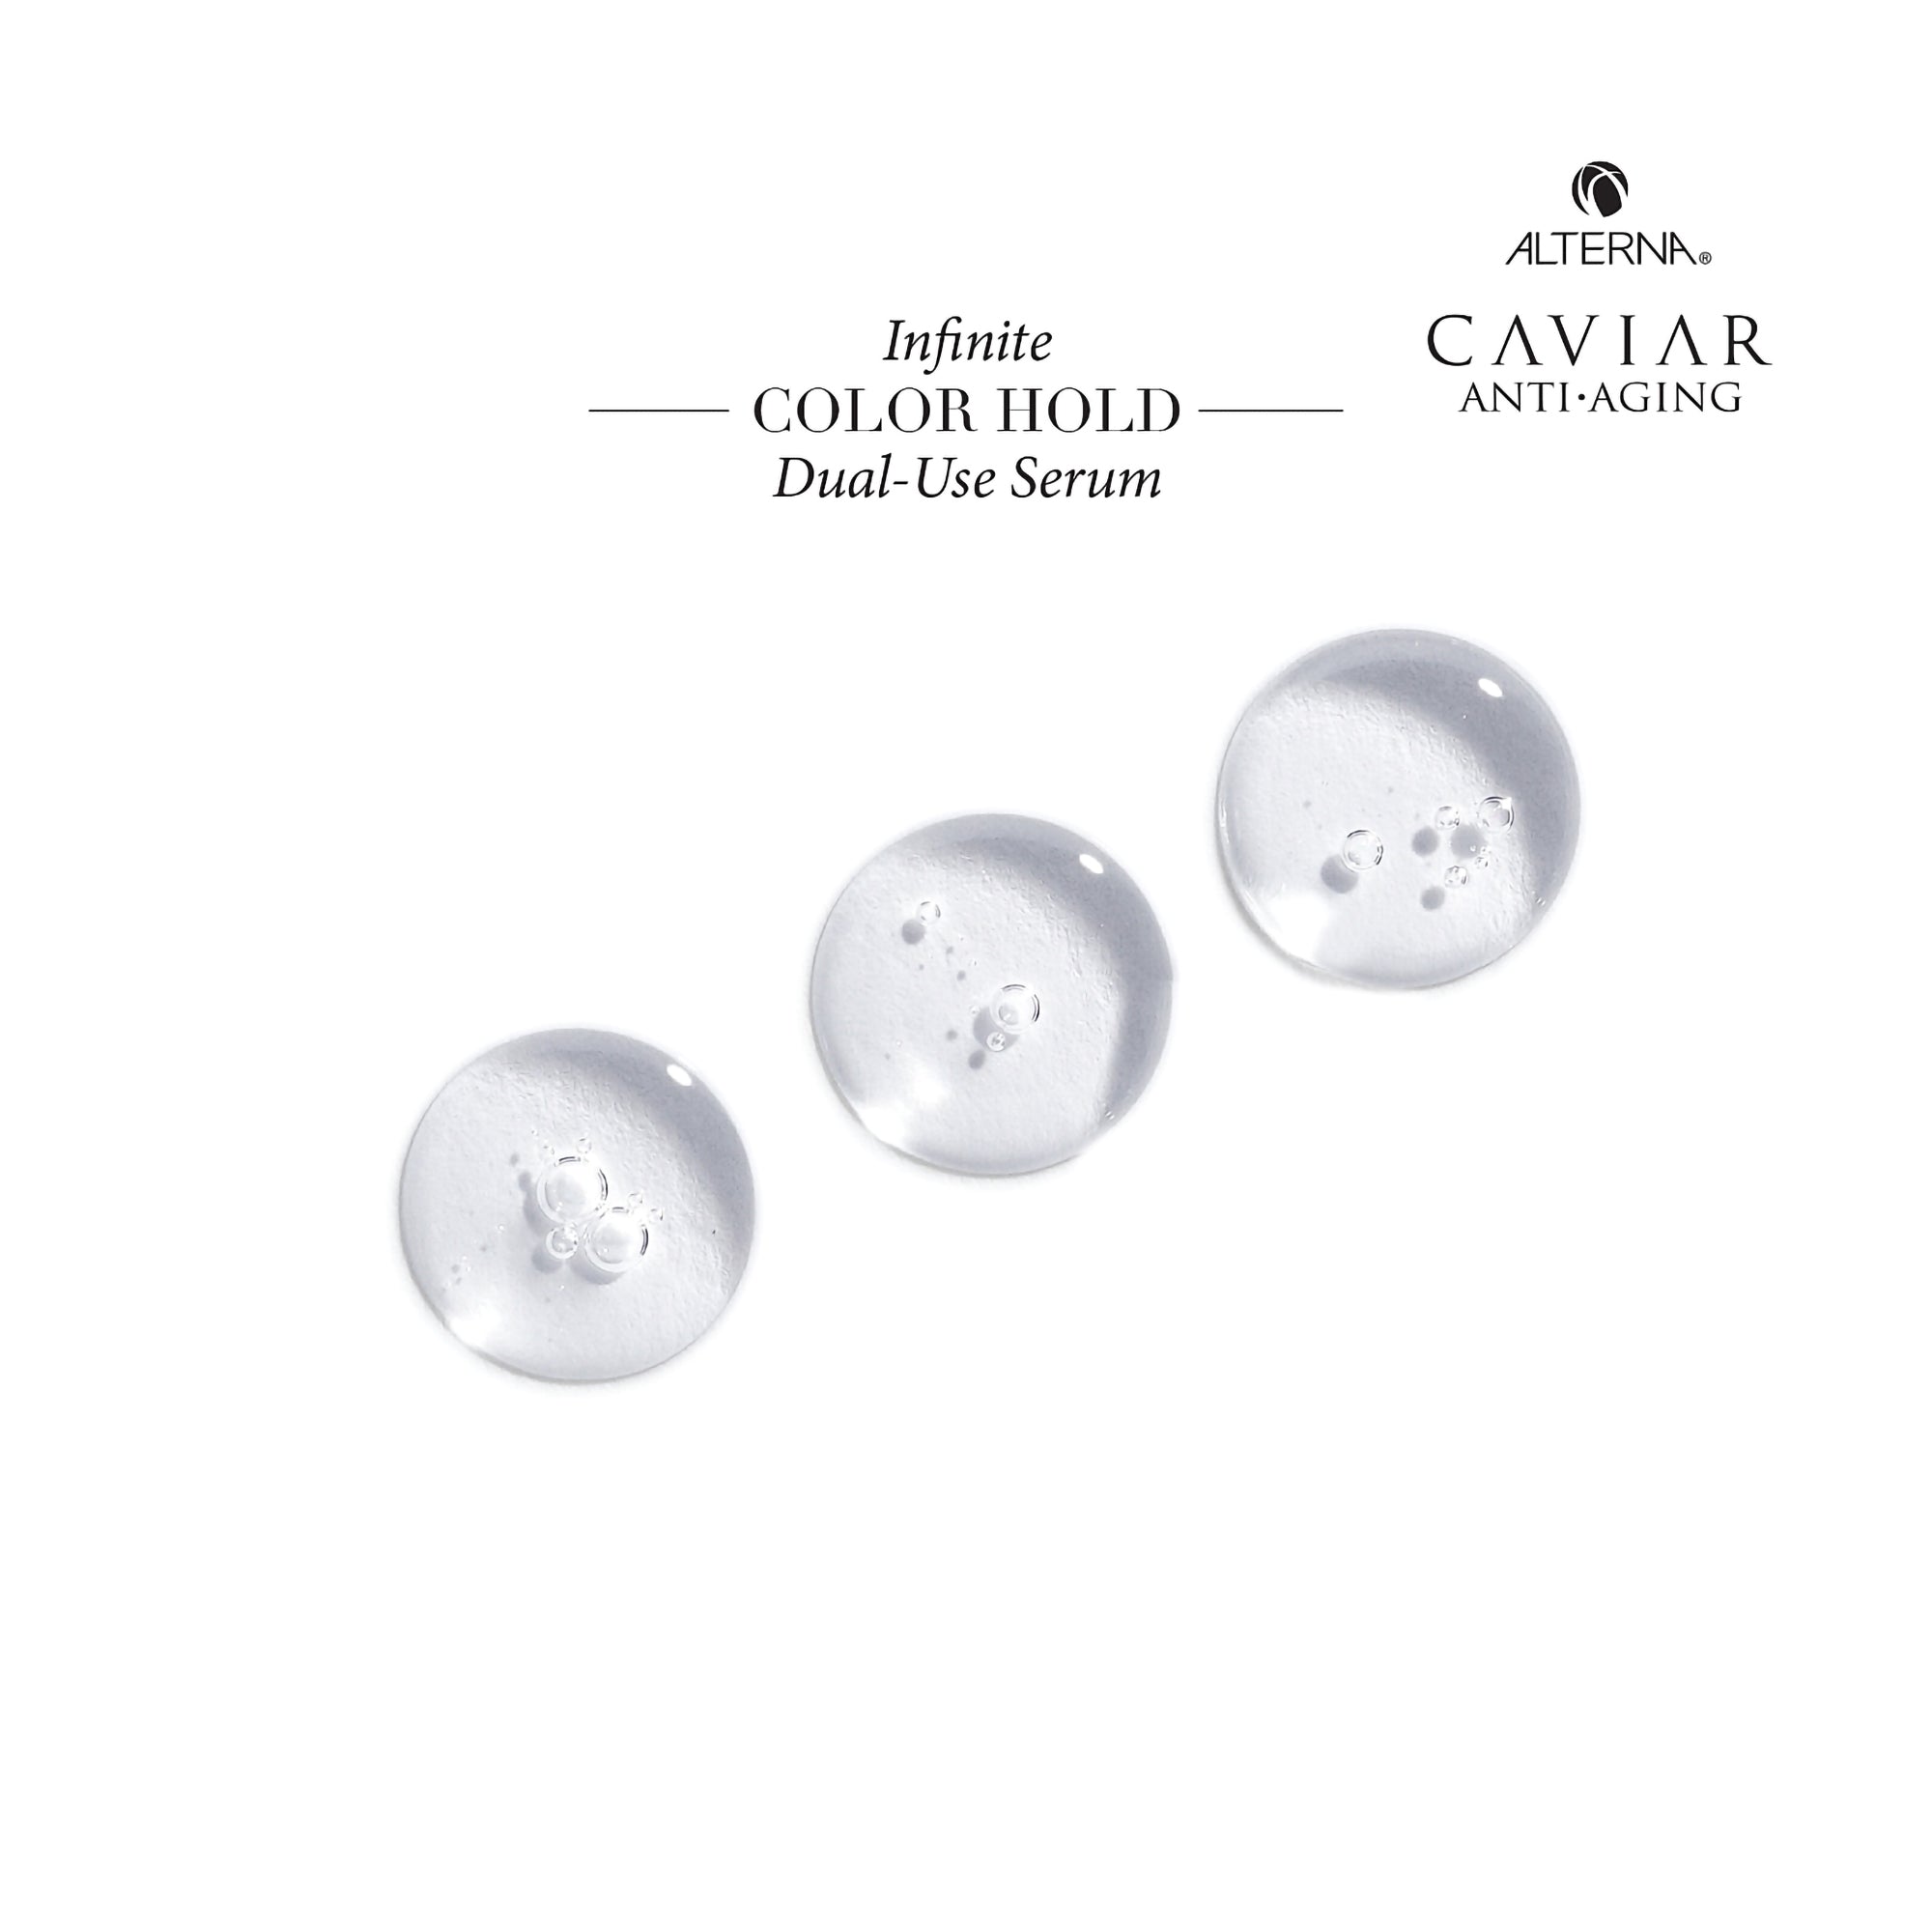 Alterna Caviar Anti-Aging Infinite Color Hold Vibrancy Serum / 1.7OZ